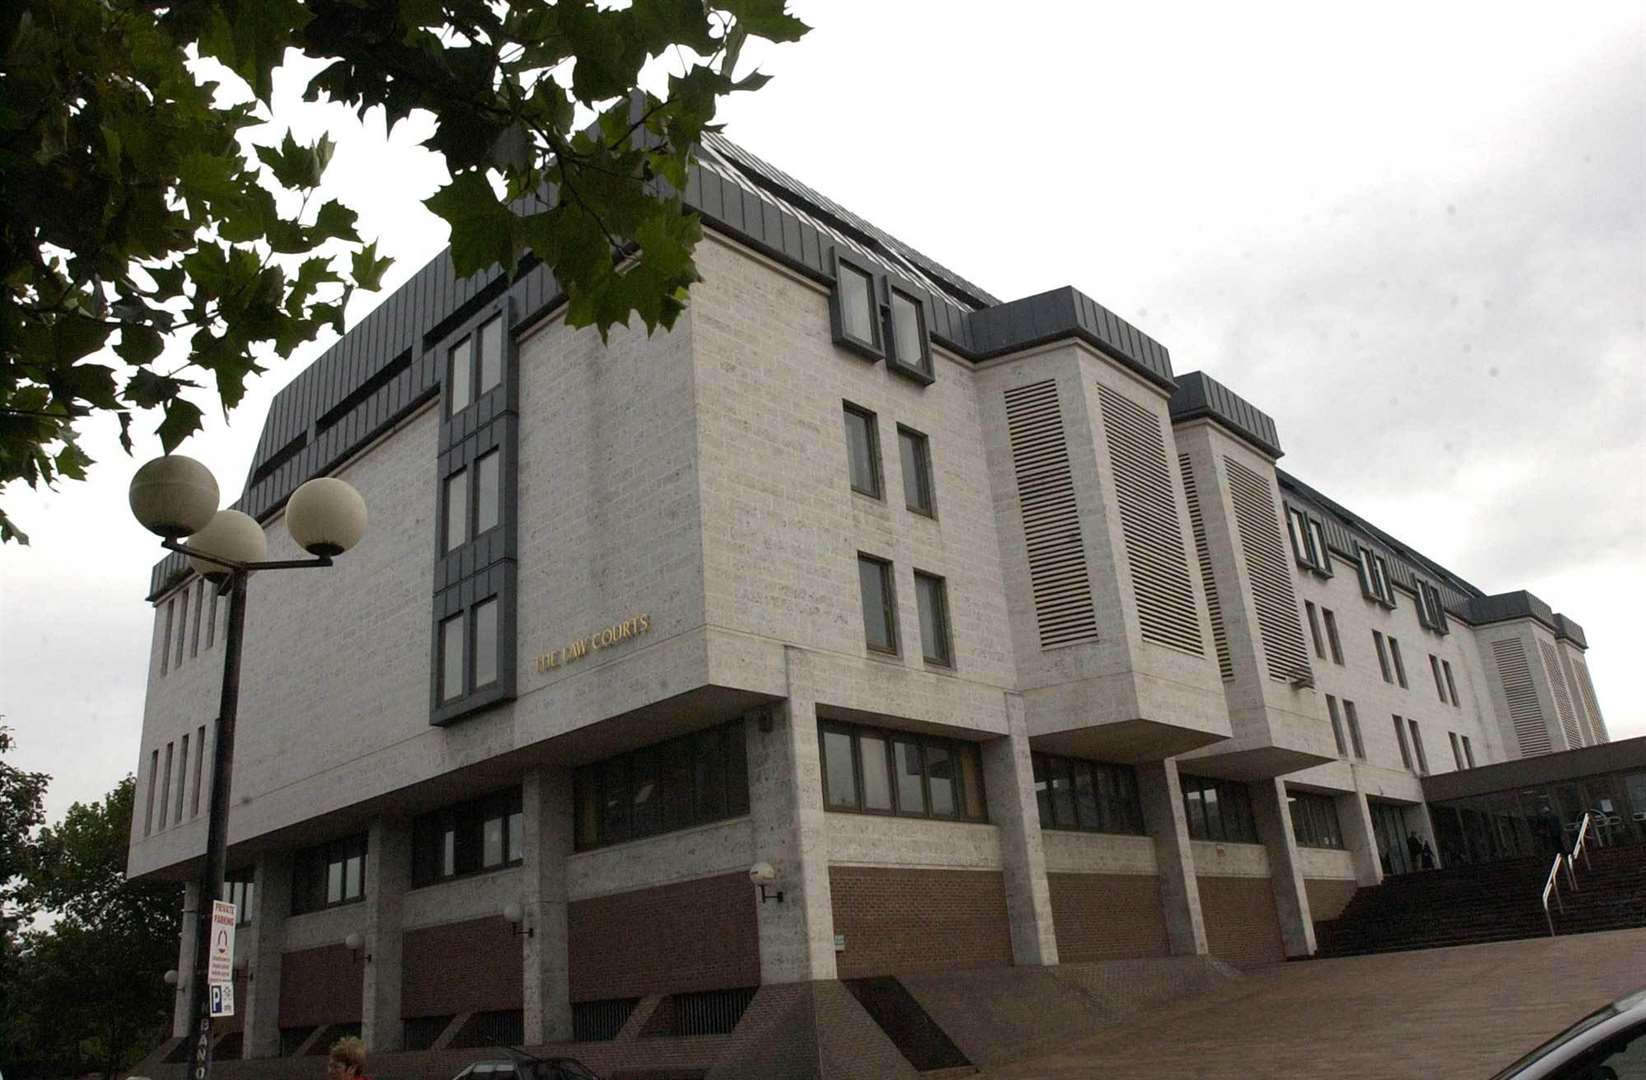 Minsende was jailed at Maidstone Crown Court